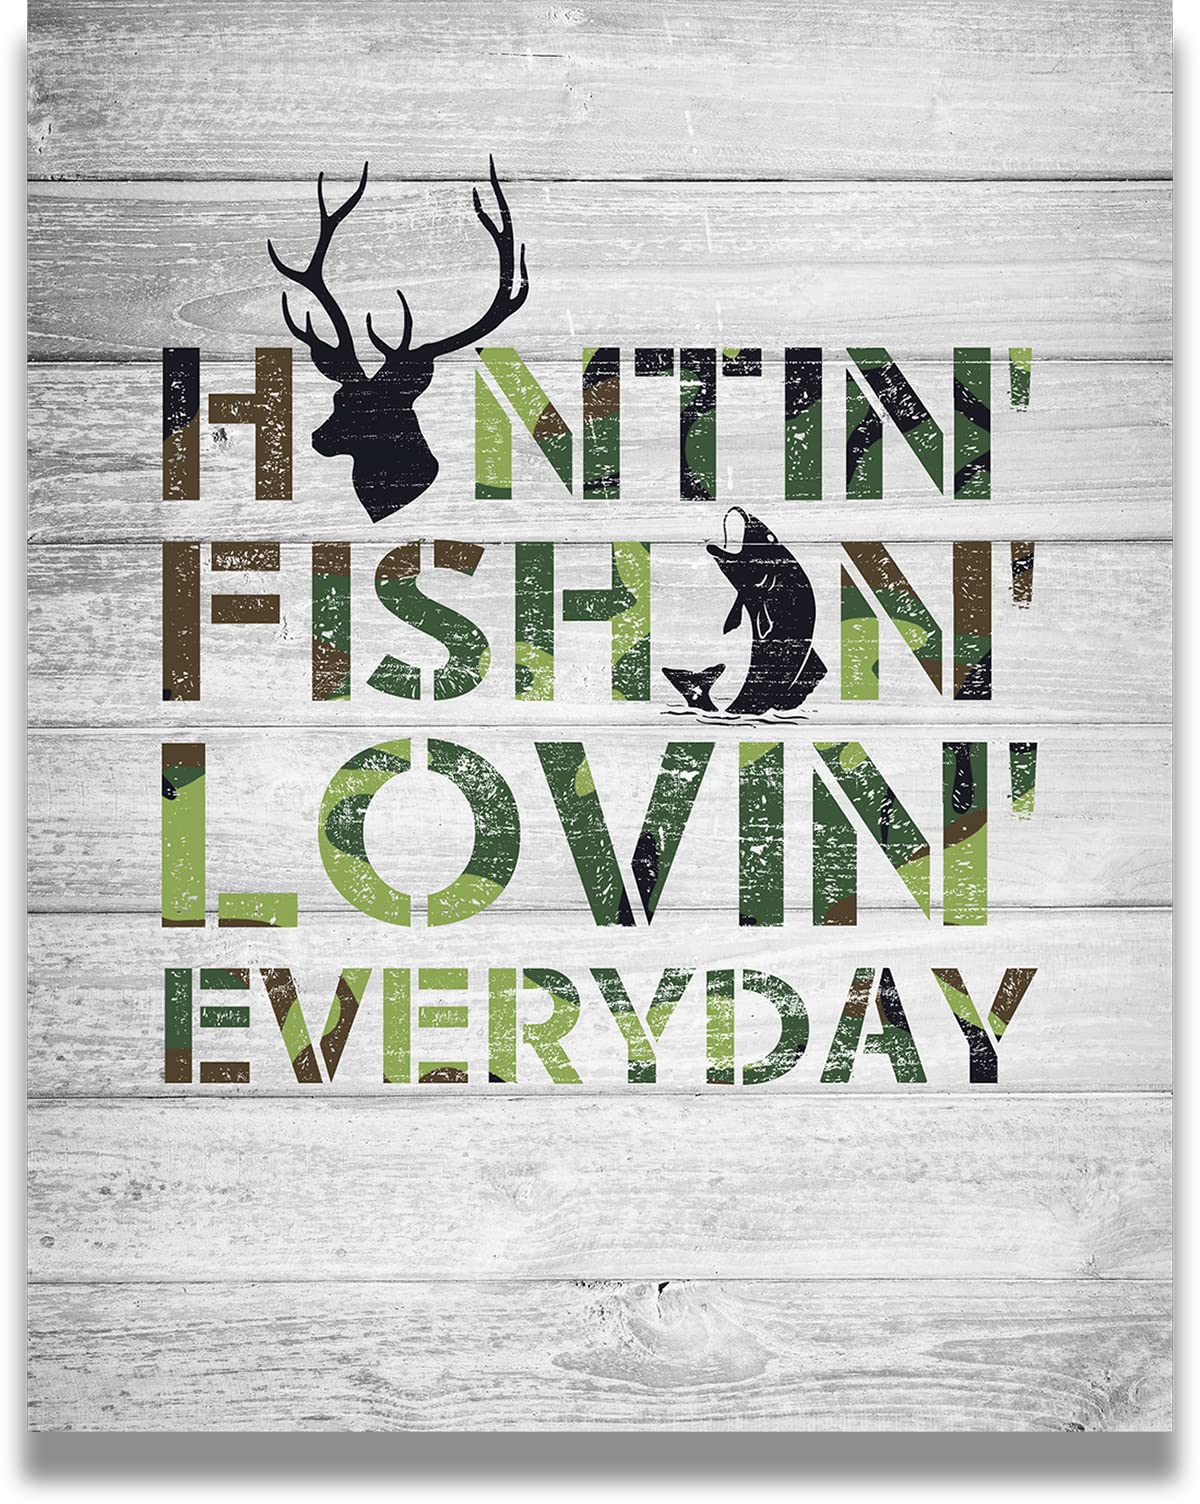 Fishing and Hunting Decor - Hunting Wall Art Decor - Gifts for Hunters & Fisherman - Rustic Hunting Cabin Decor - Farmhouse Hunting Wall Decor